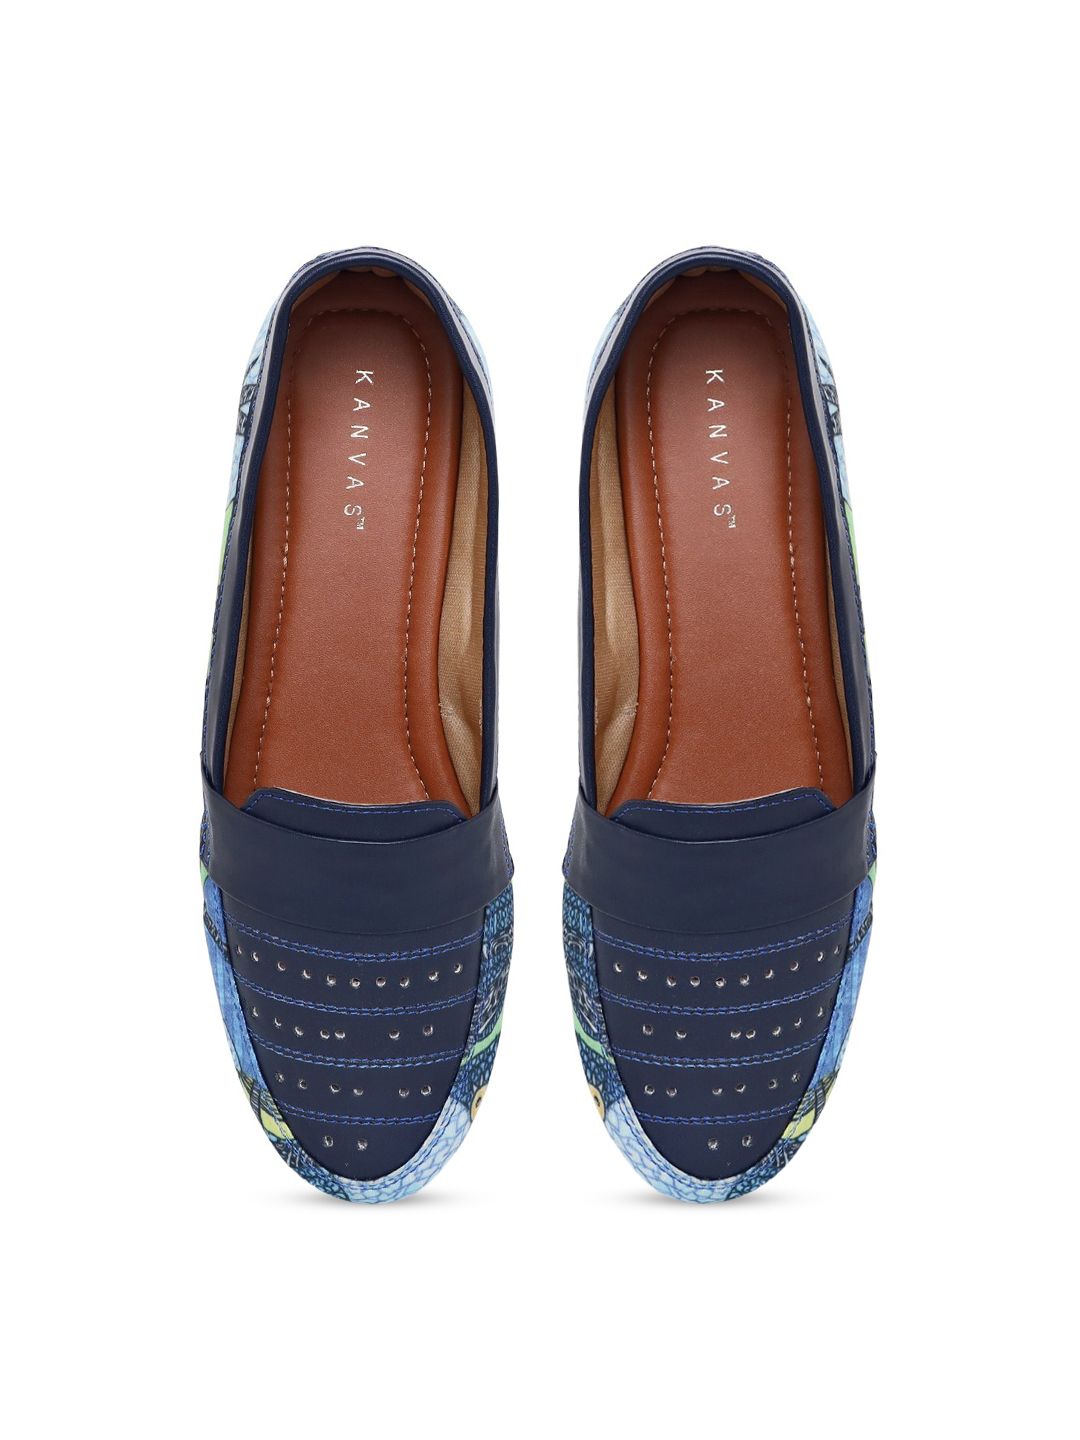 Kanvas Women Blue Printed Slip-On Sneakers Price in India